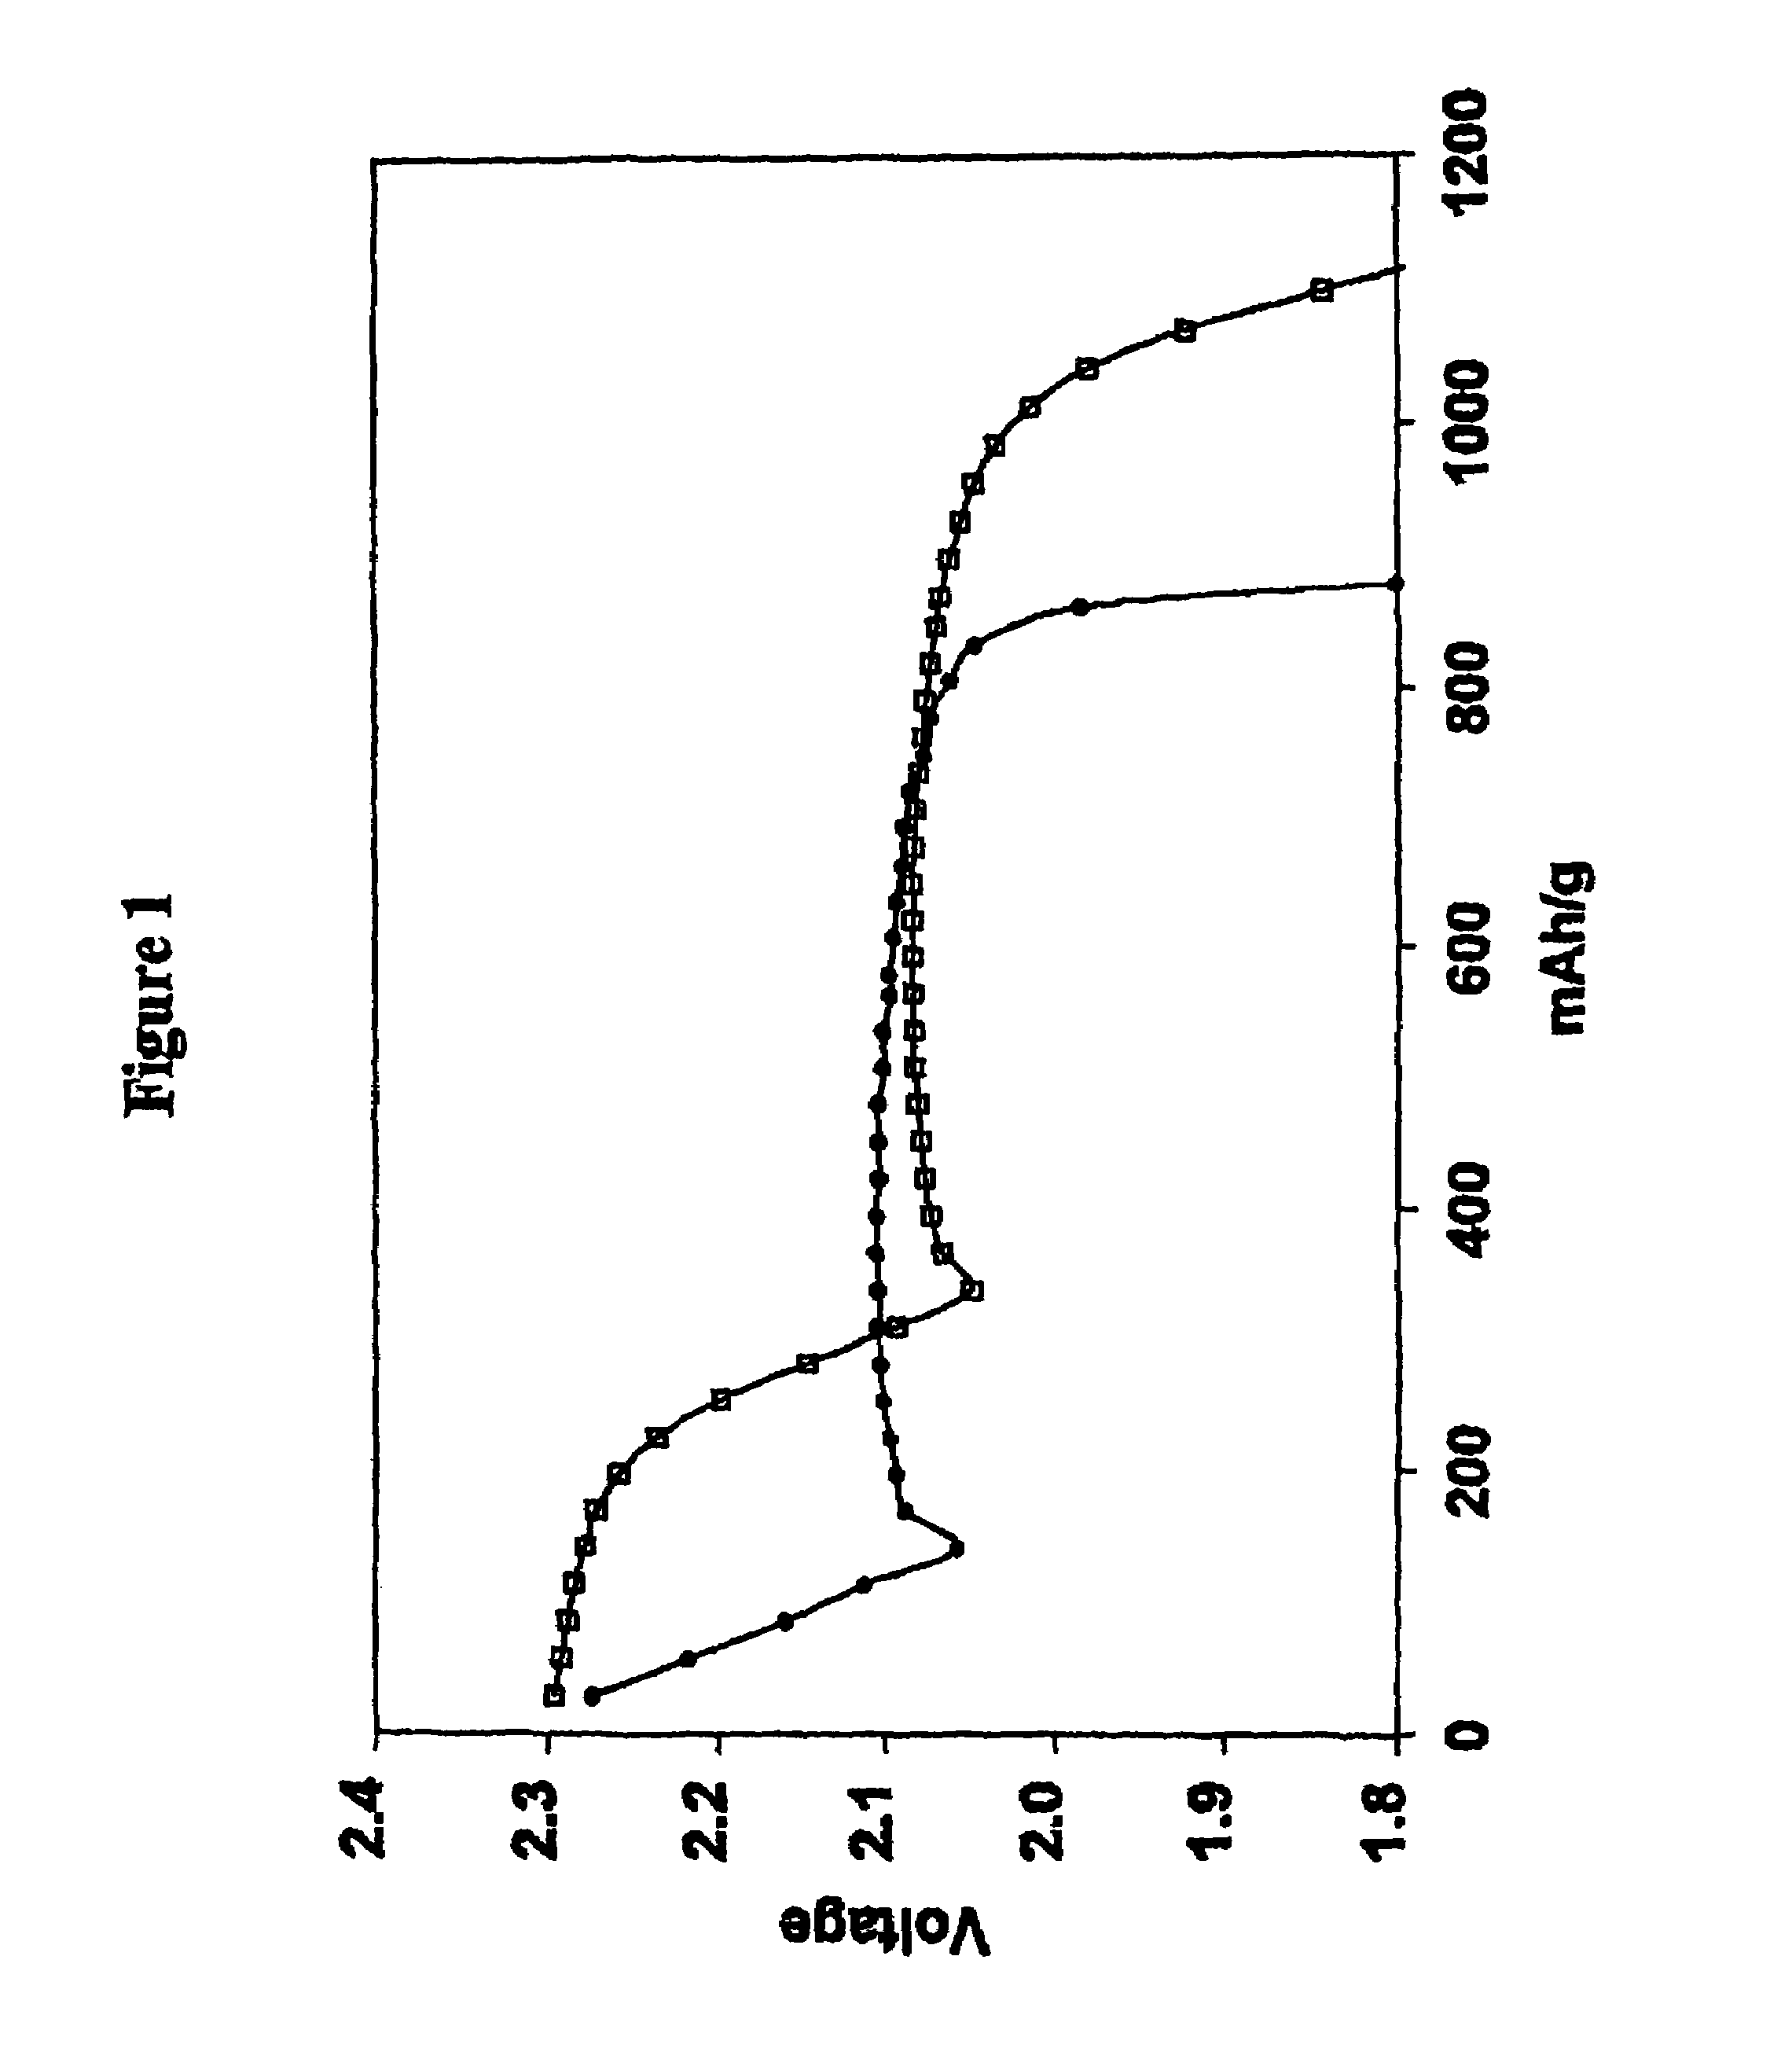 Methods of charging lithium sulfur cells